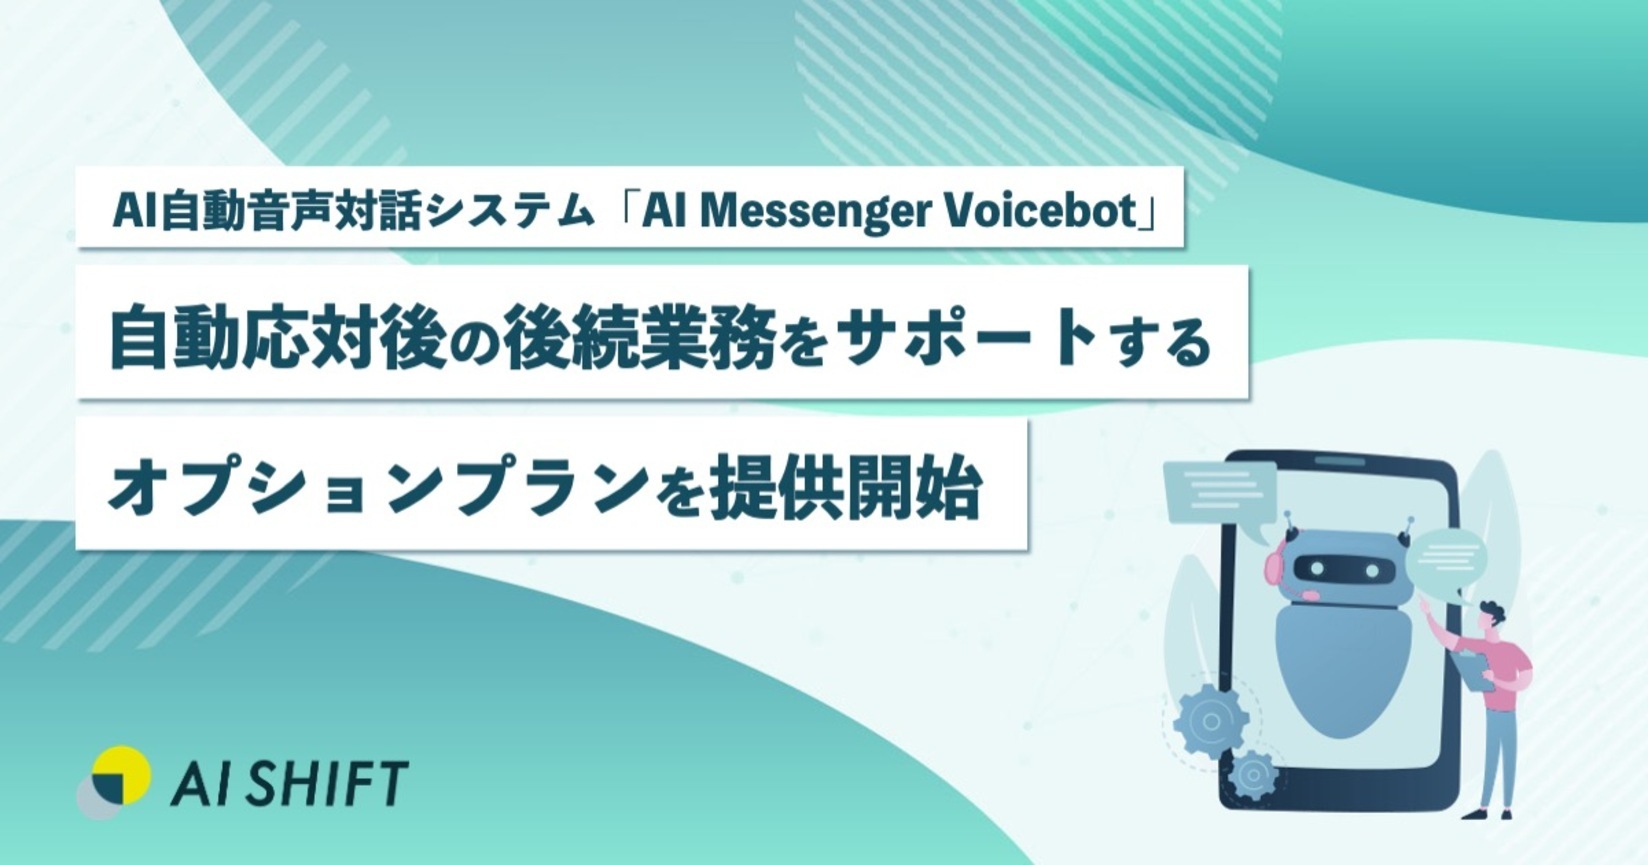 AI自動音声対話システムAI Messenger Voicebotにて自動応対後の後続業務をサポートするオプションプランを提供開始 ヒアリング後のデータチェックやAPI等を活用した